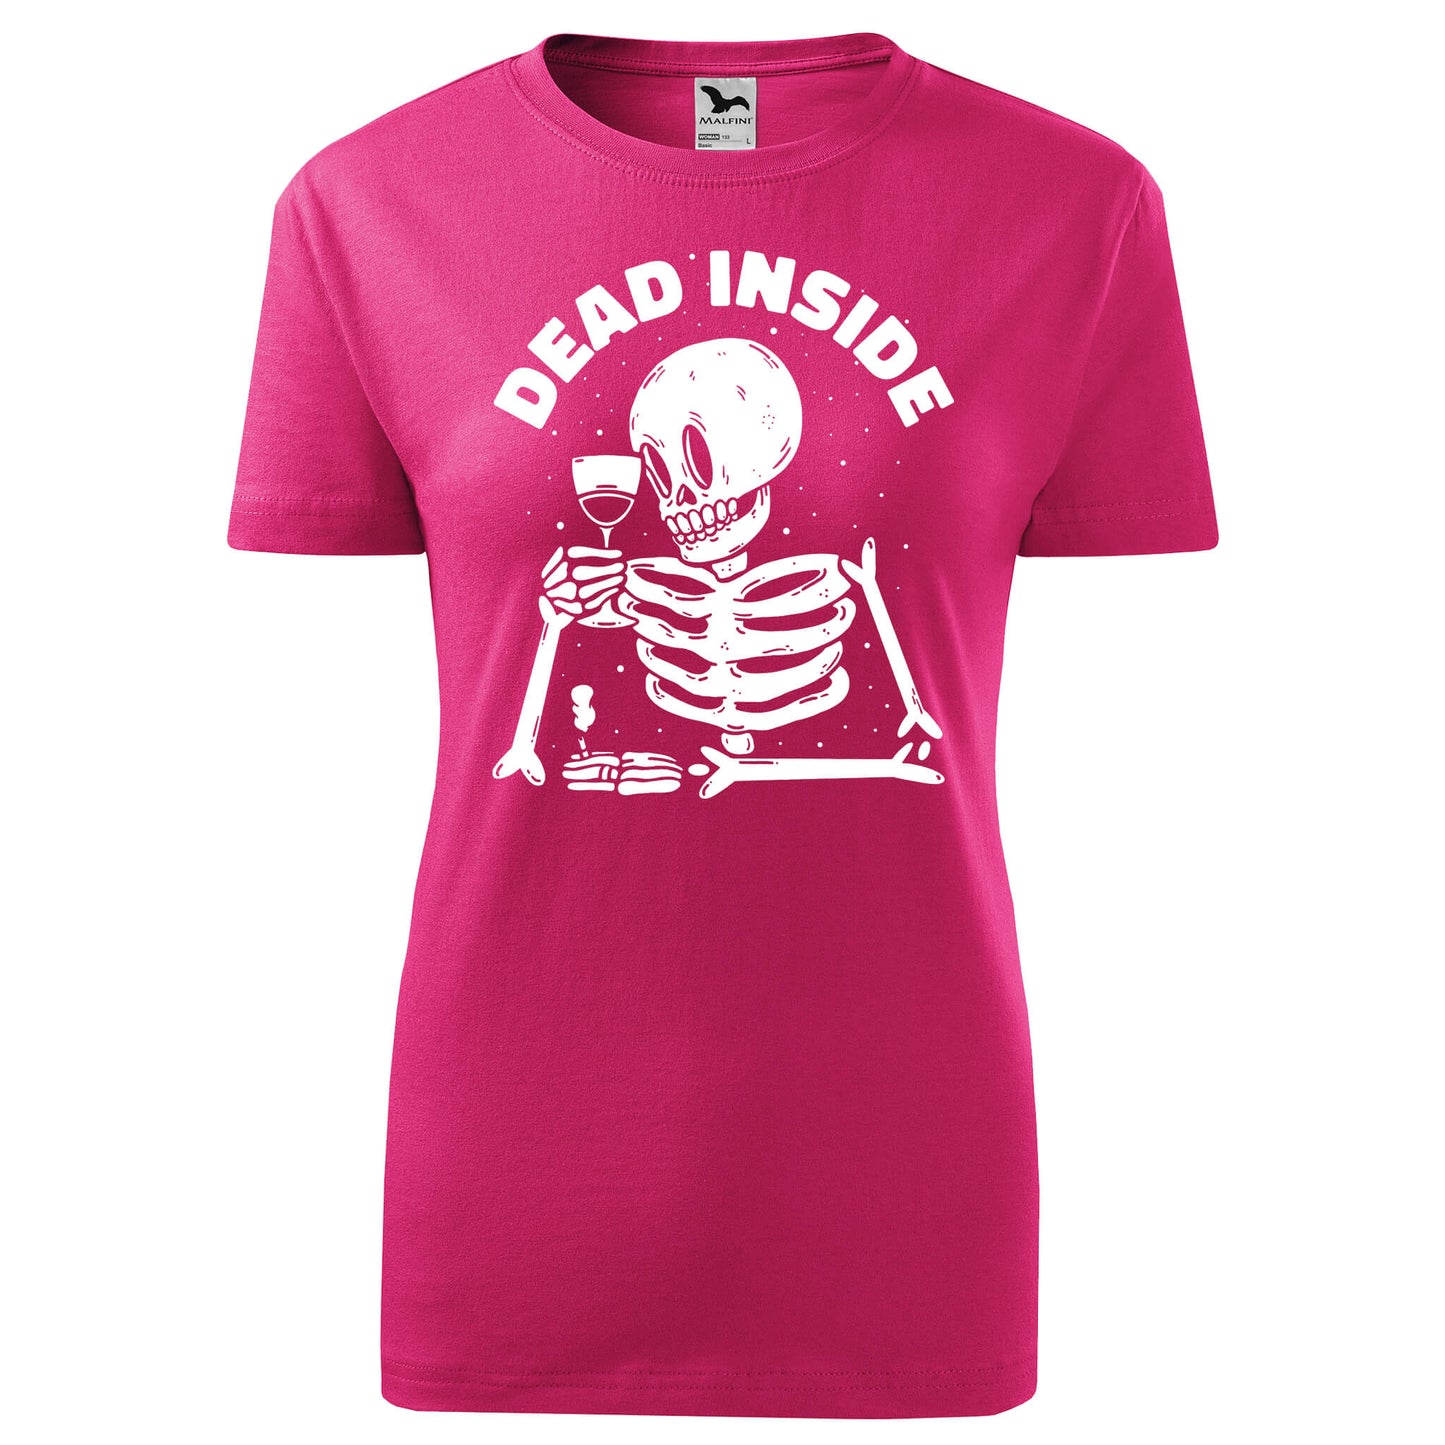 Dead inside t-shirt - rvdesignprint